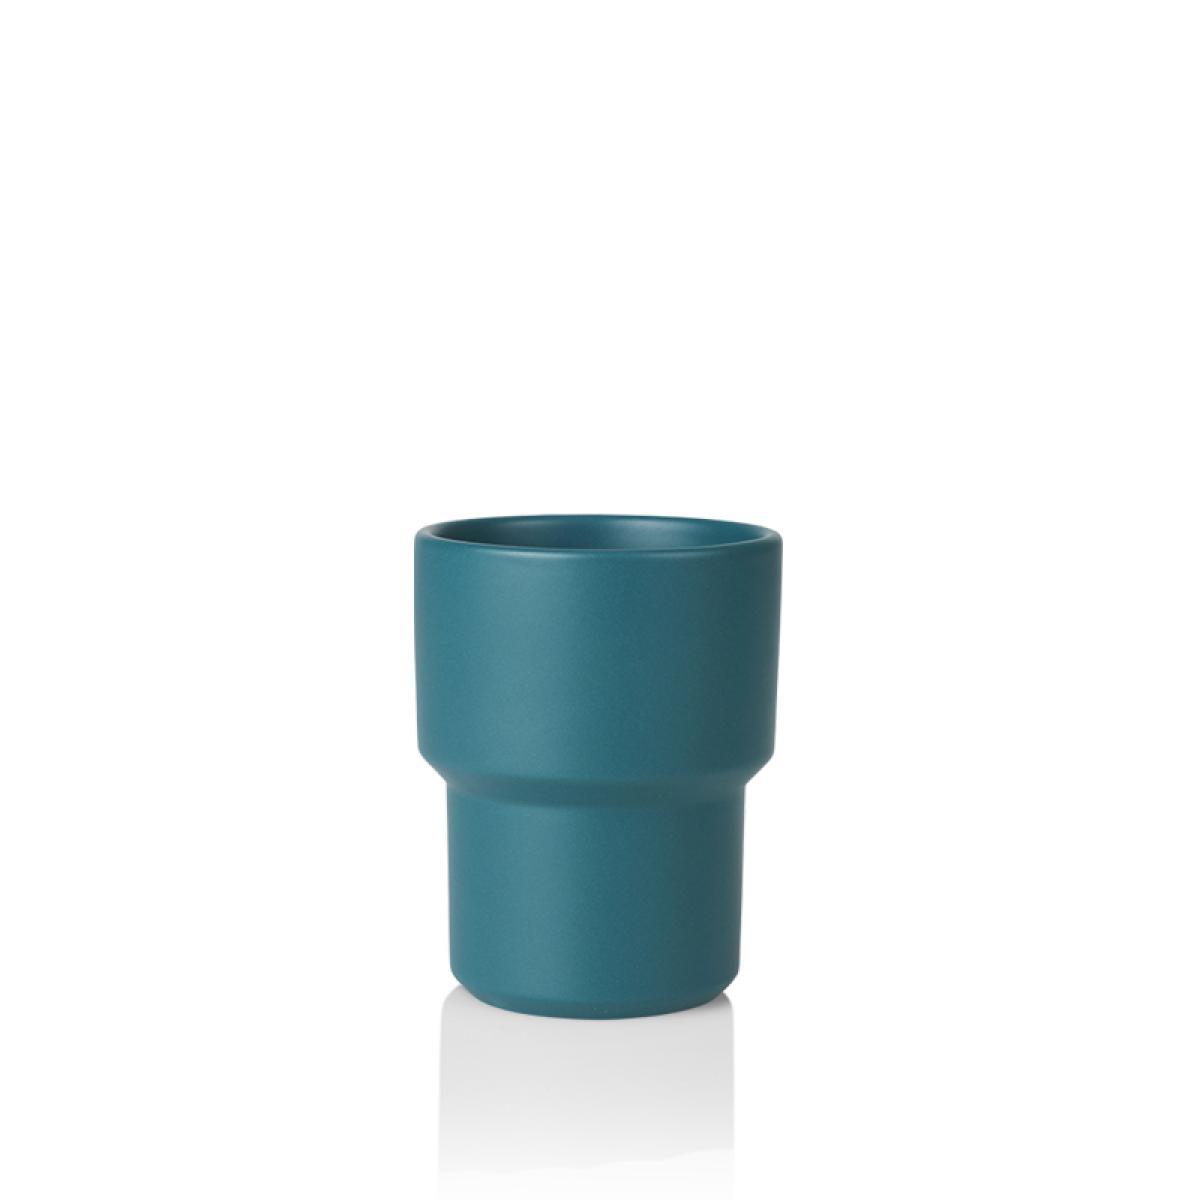 Lucie Kaas Fumario Cup Petrol Blue, 10 cm